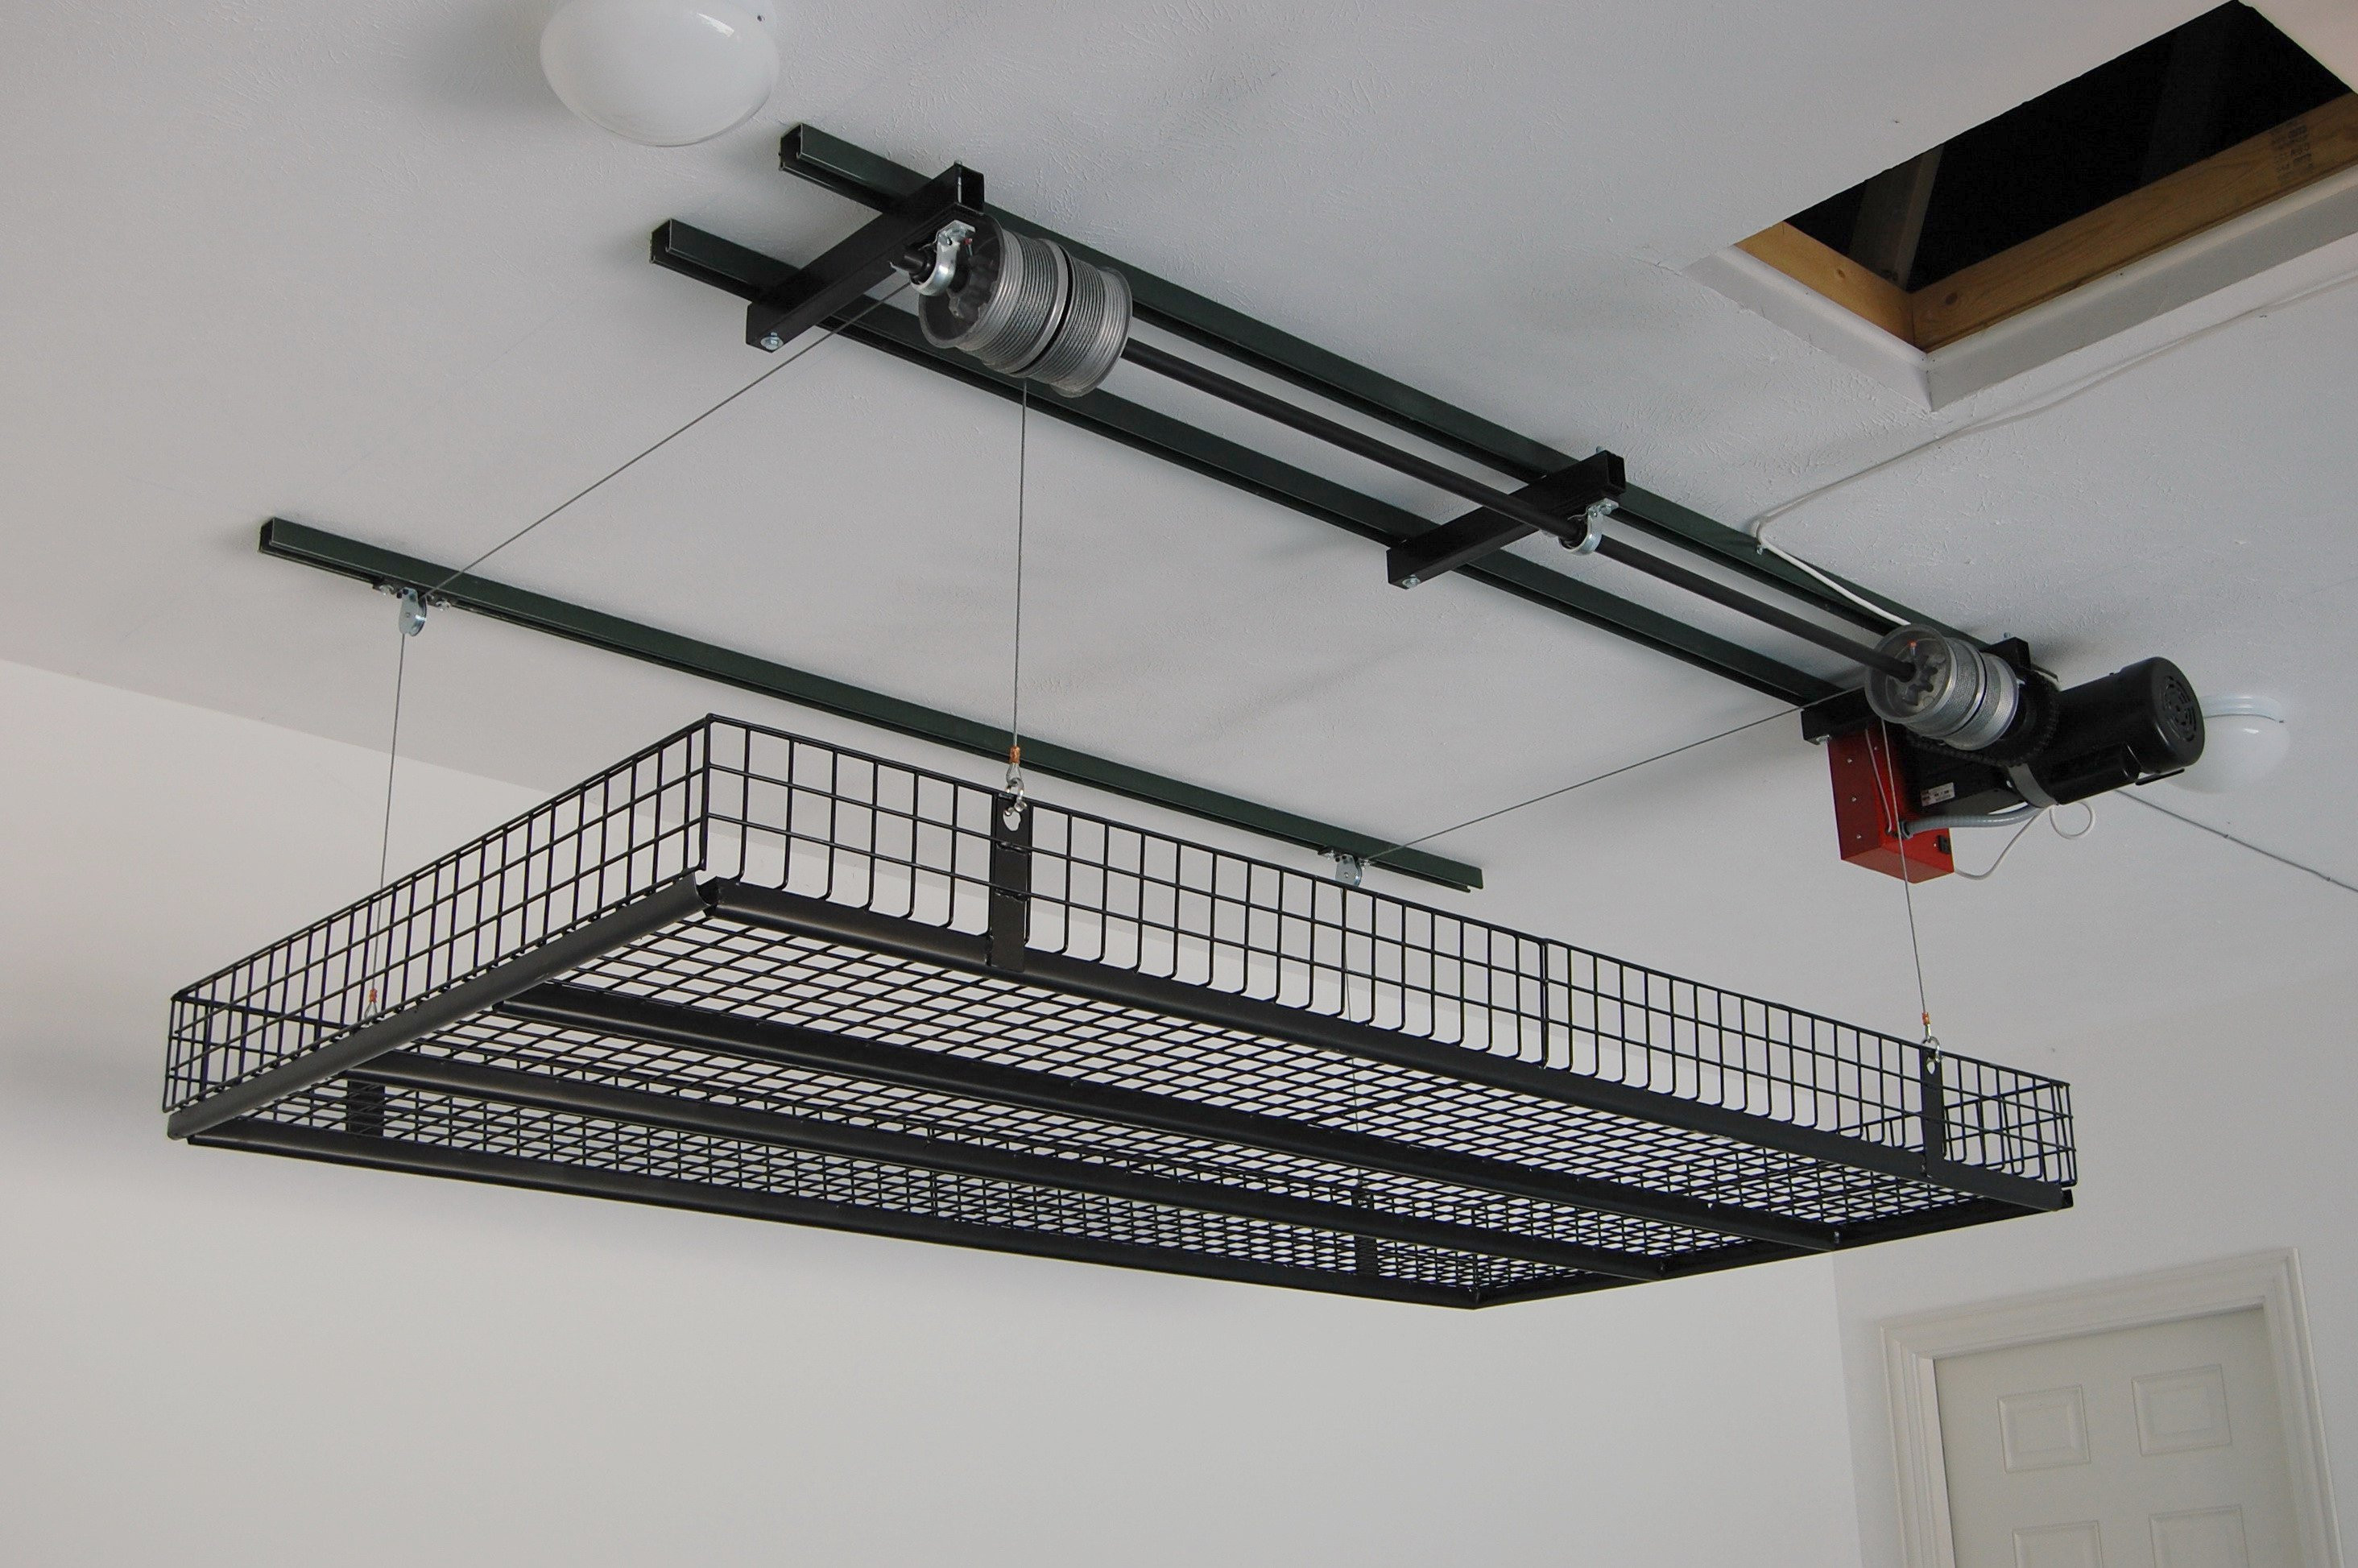 Best ideas about Garage Ceiling Storage Lift
. Save or Pin Garage Ceiling Storage Lift Garage Ceiling Lift Hoist Now.